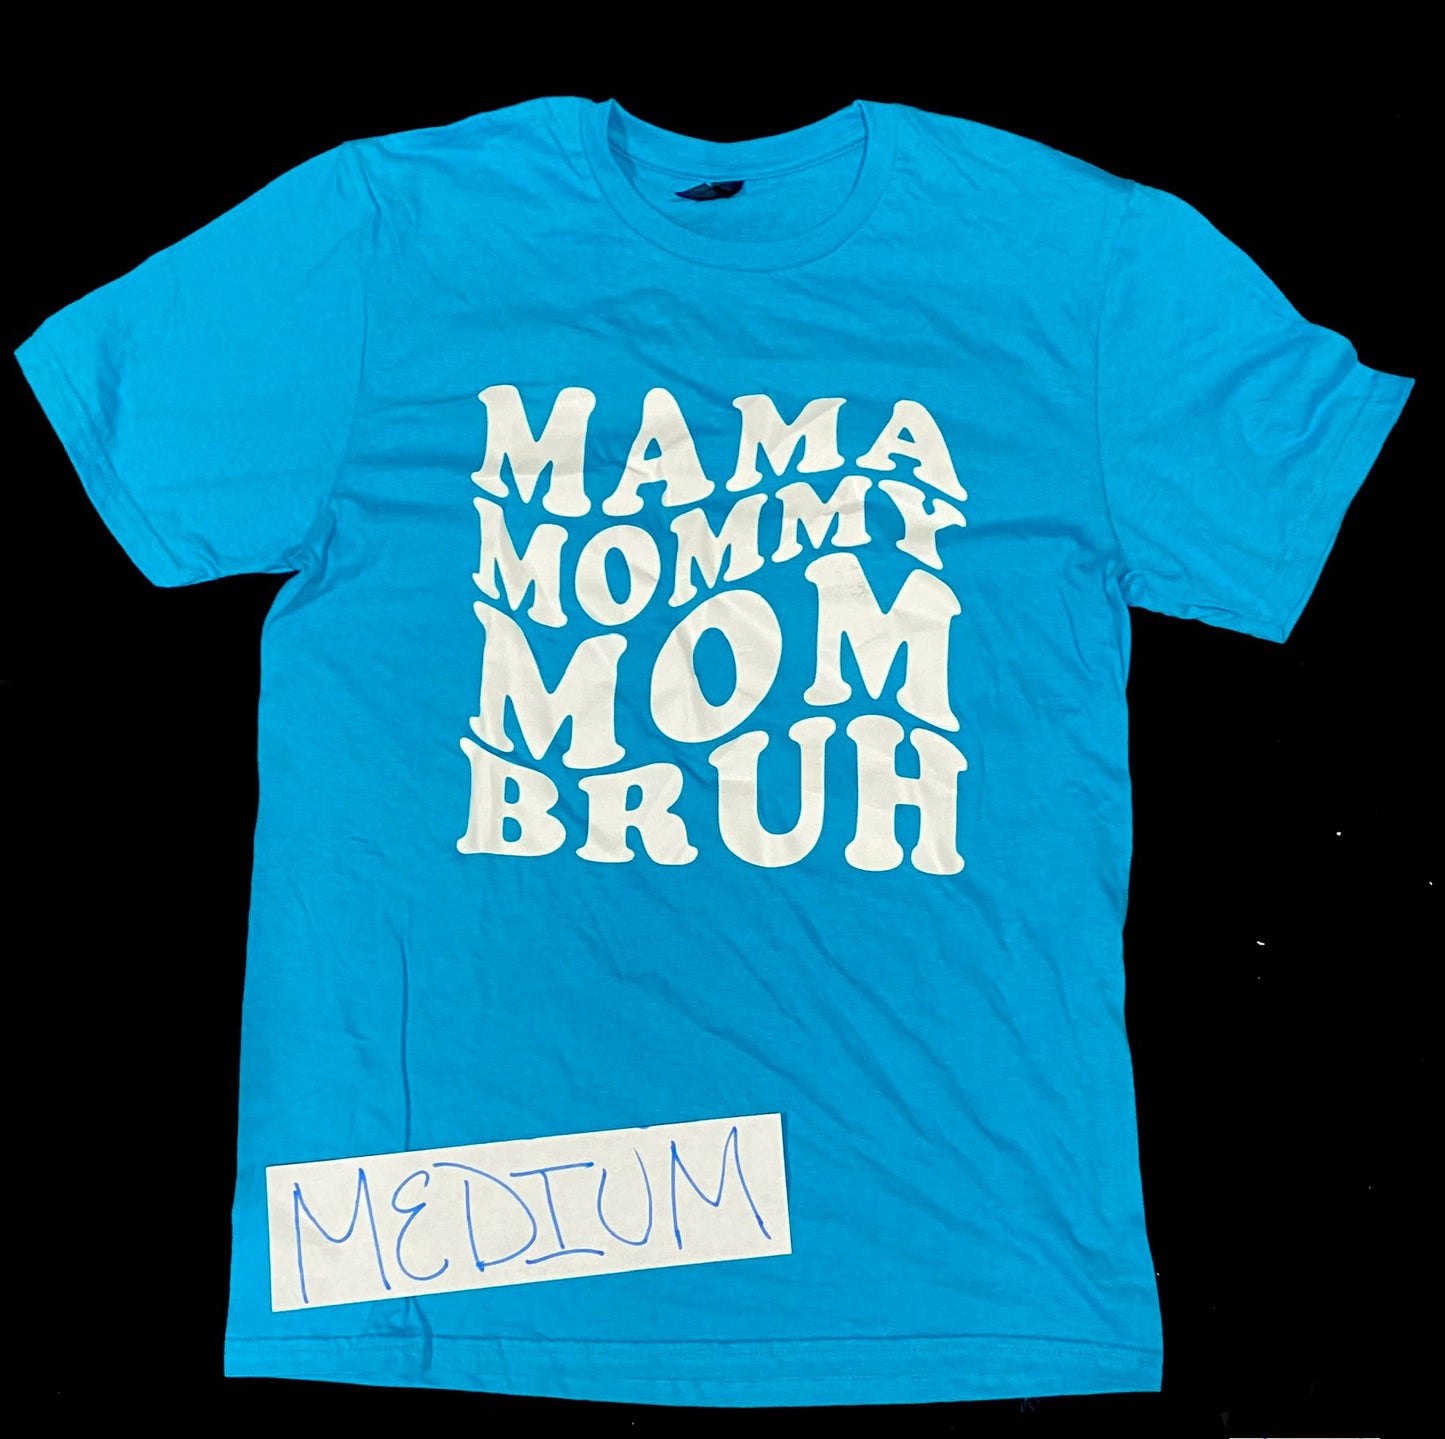 MAMA MOMMY MOM BRUH